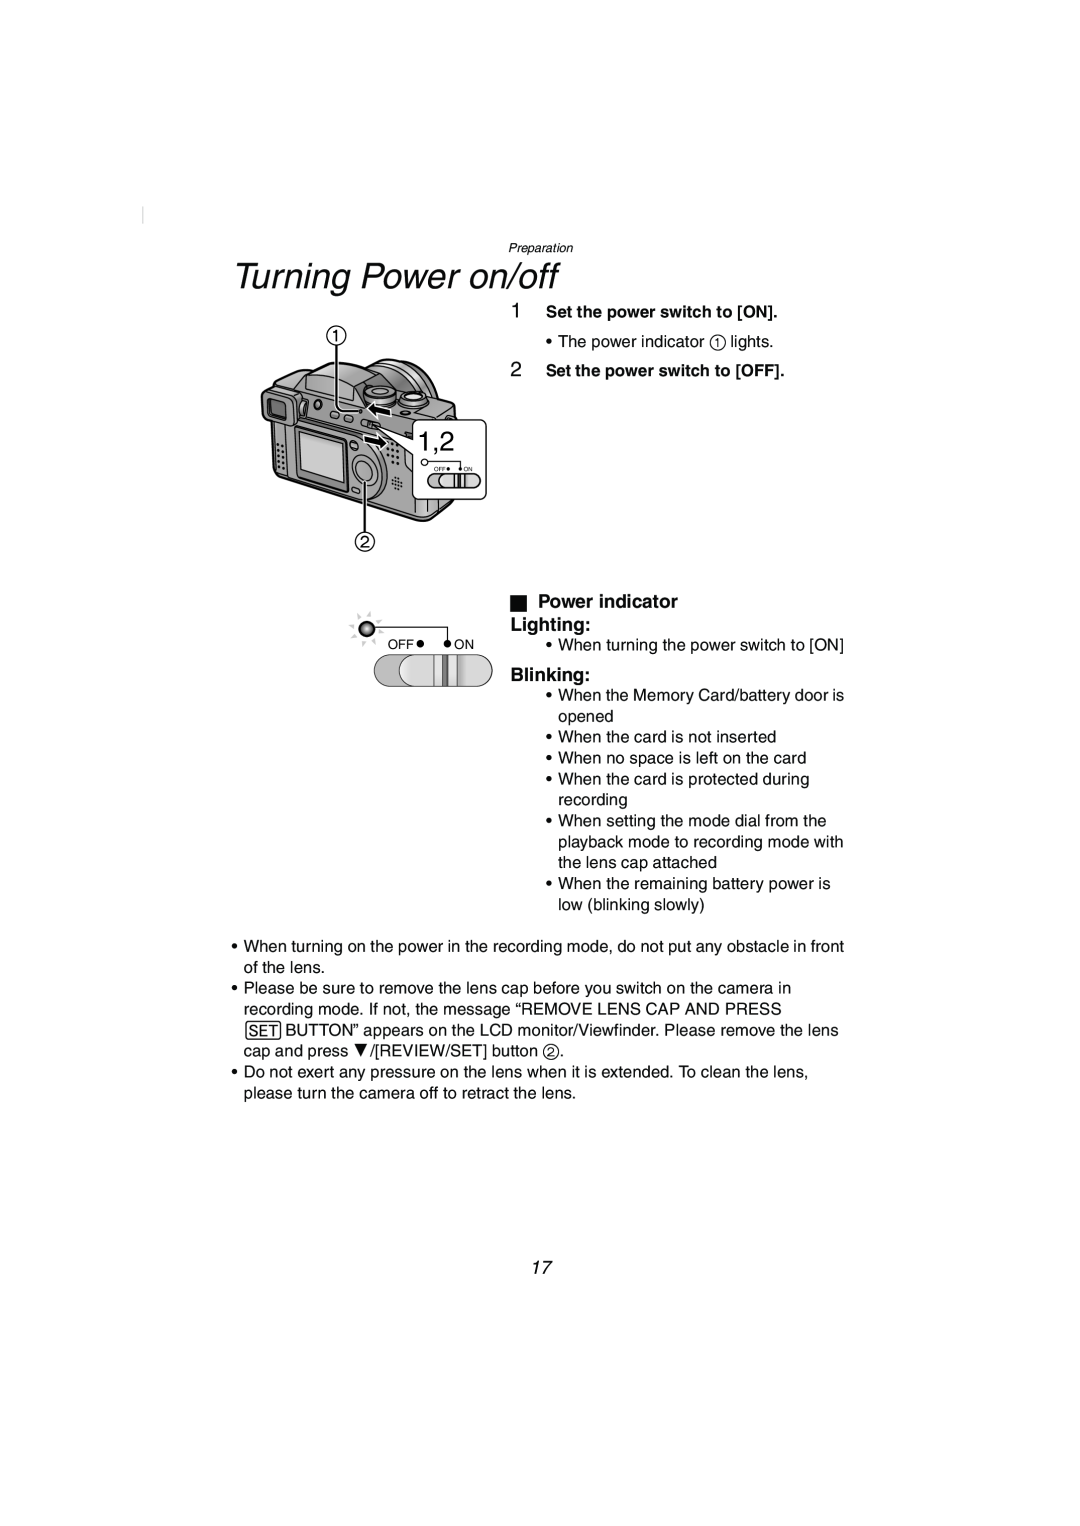 Panasonic DMC-FZ2PP operating instructions Turning Power on/off, Set the power switch to ON, Set the power switch to OFF 